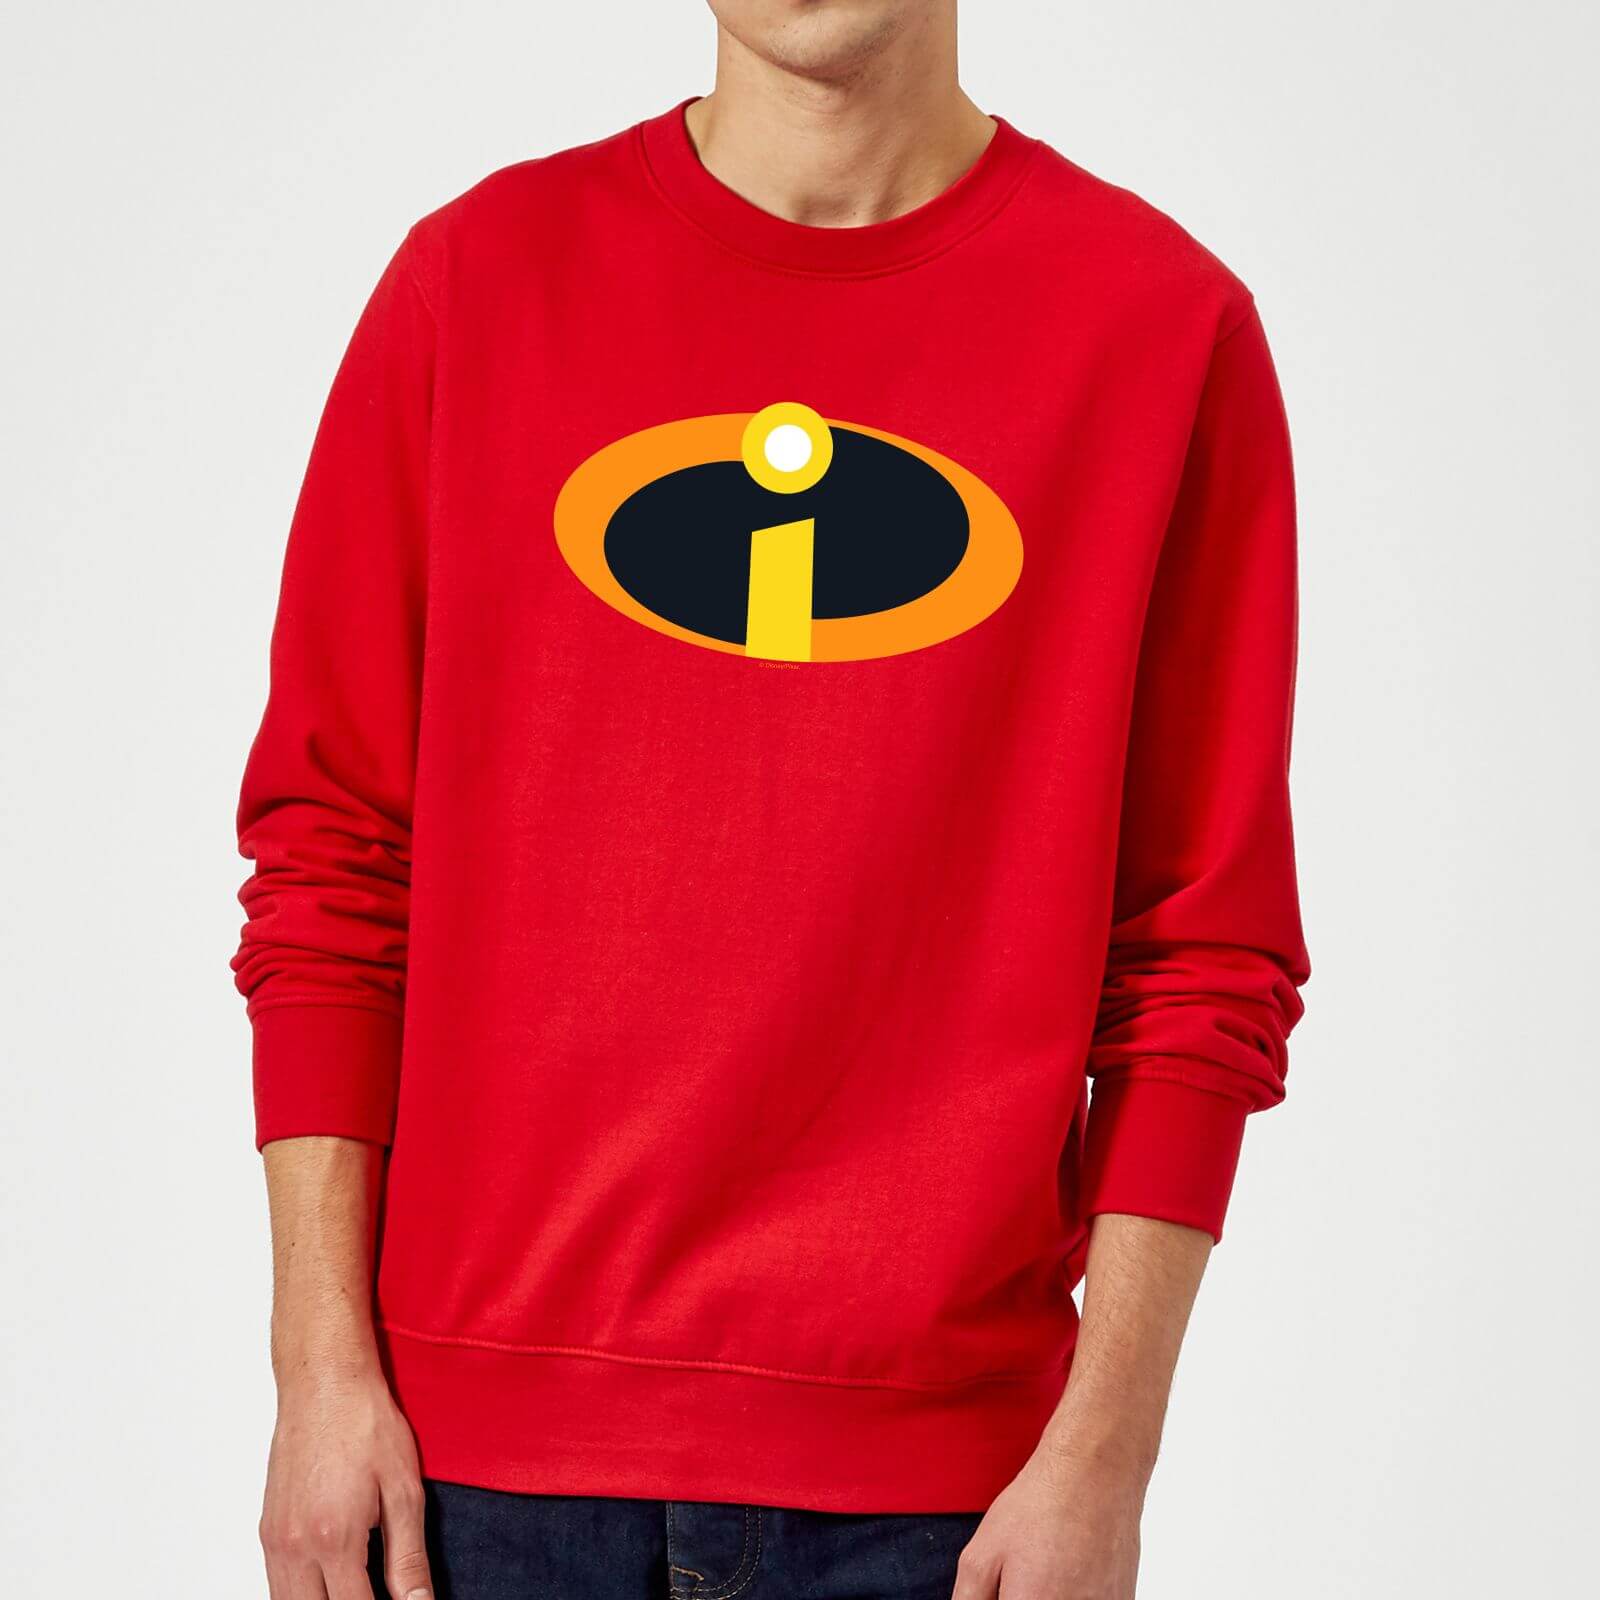 Incredibles 2 Logo Sweatshirt - Red - L